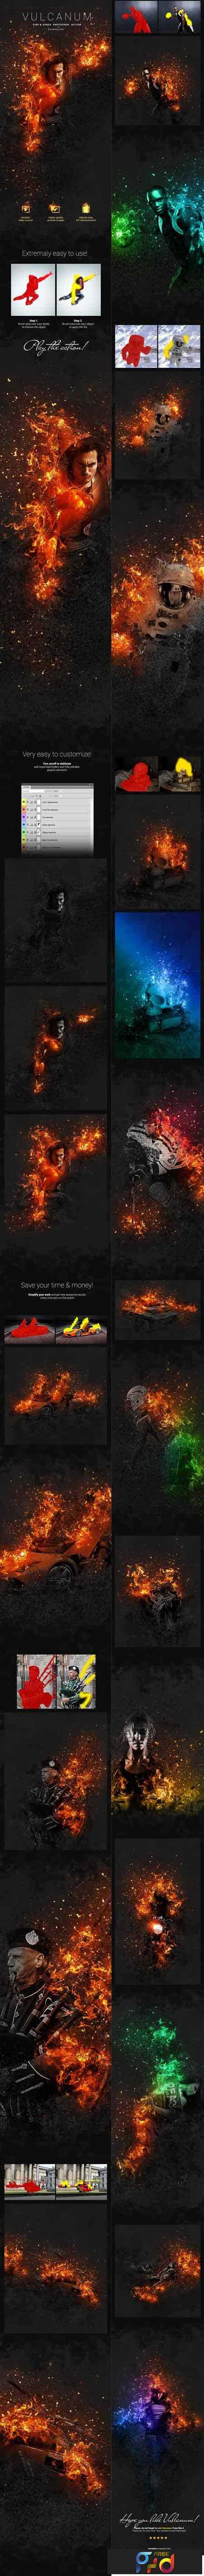 Vulcanum   Fire & Ashes Photoshop Action